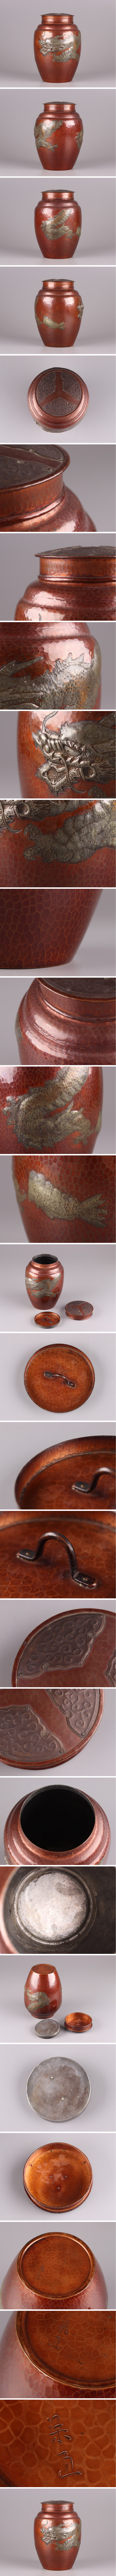 新宿古美術 銅虫 銅製打出 銀象嵌 龍図 茶入 時代物 極上品 初だし品 3826 その他